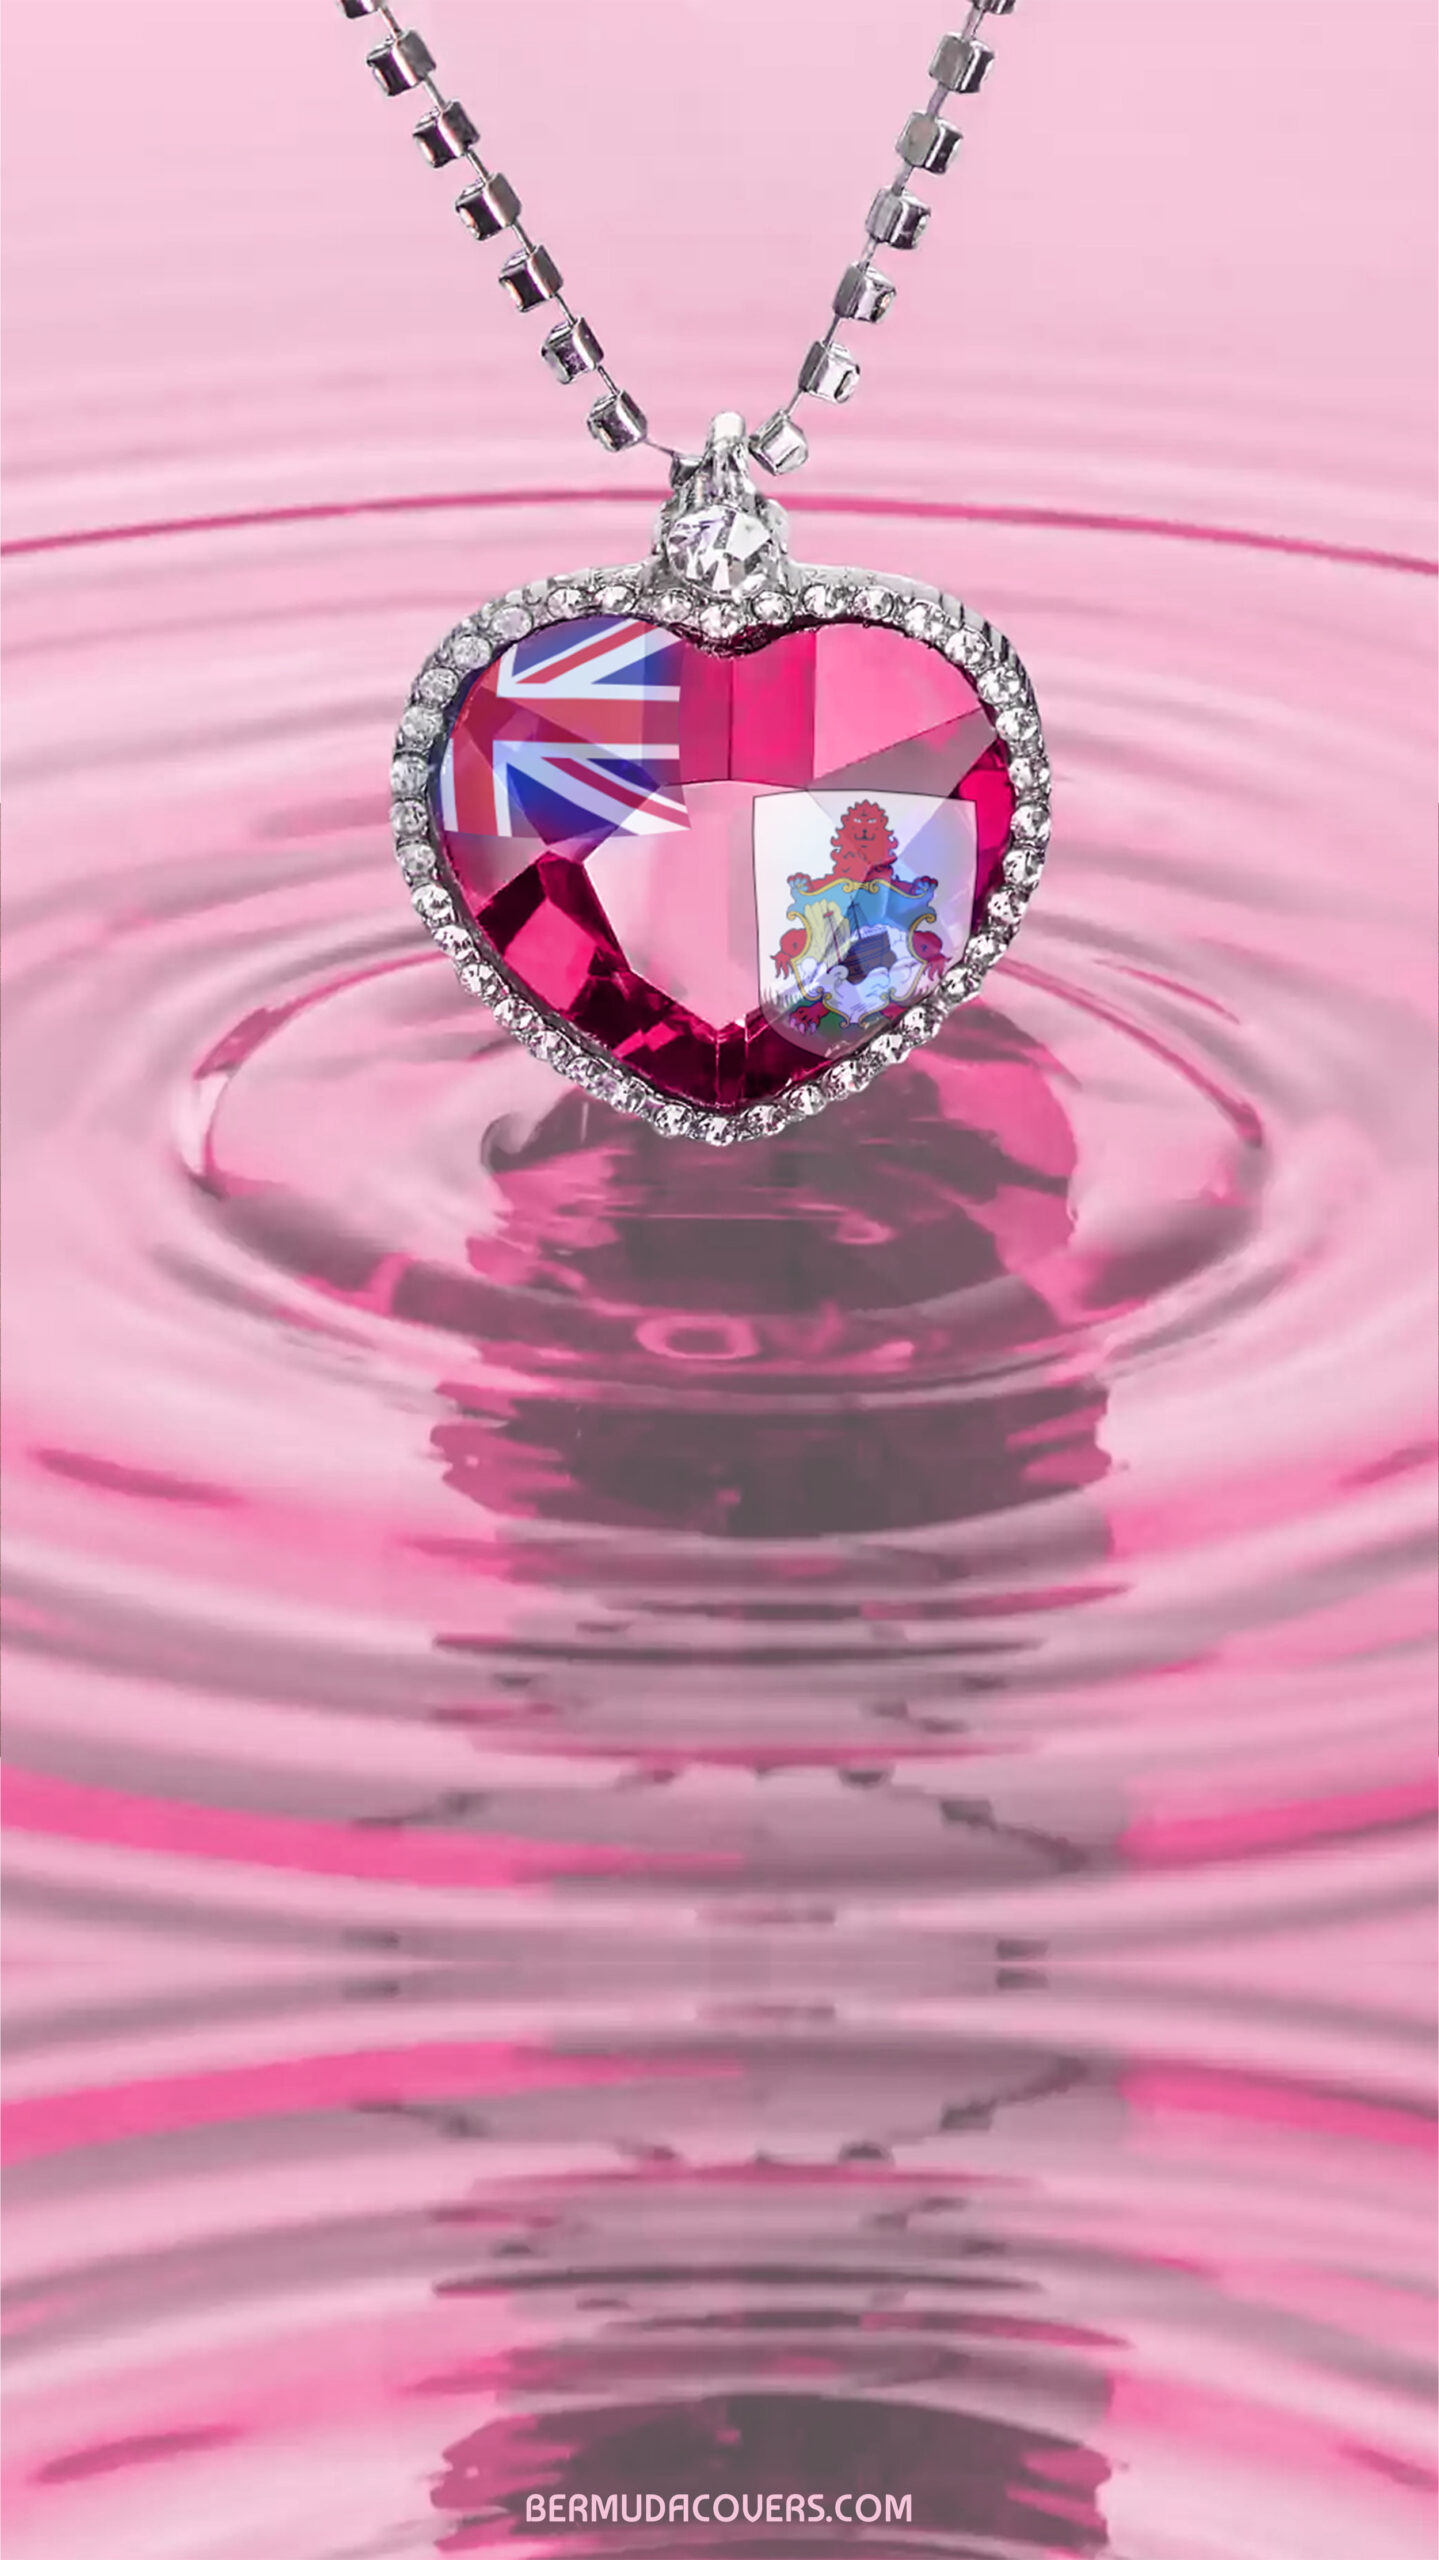 Bermuda Necklace In Pink Water Phone Wallpaper 0982354